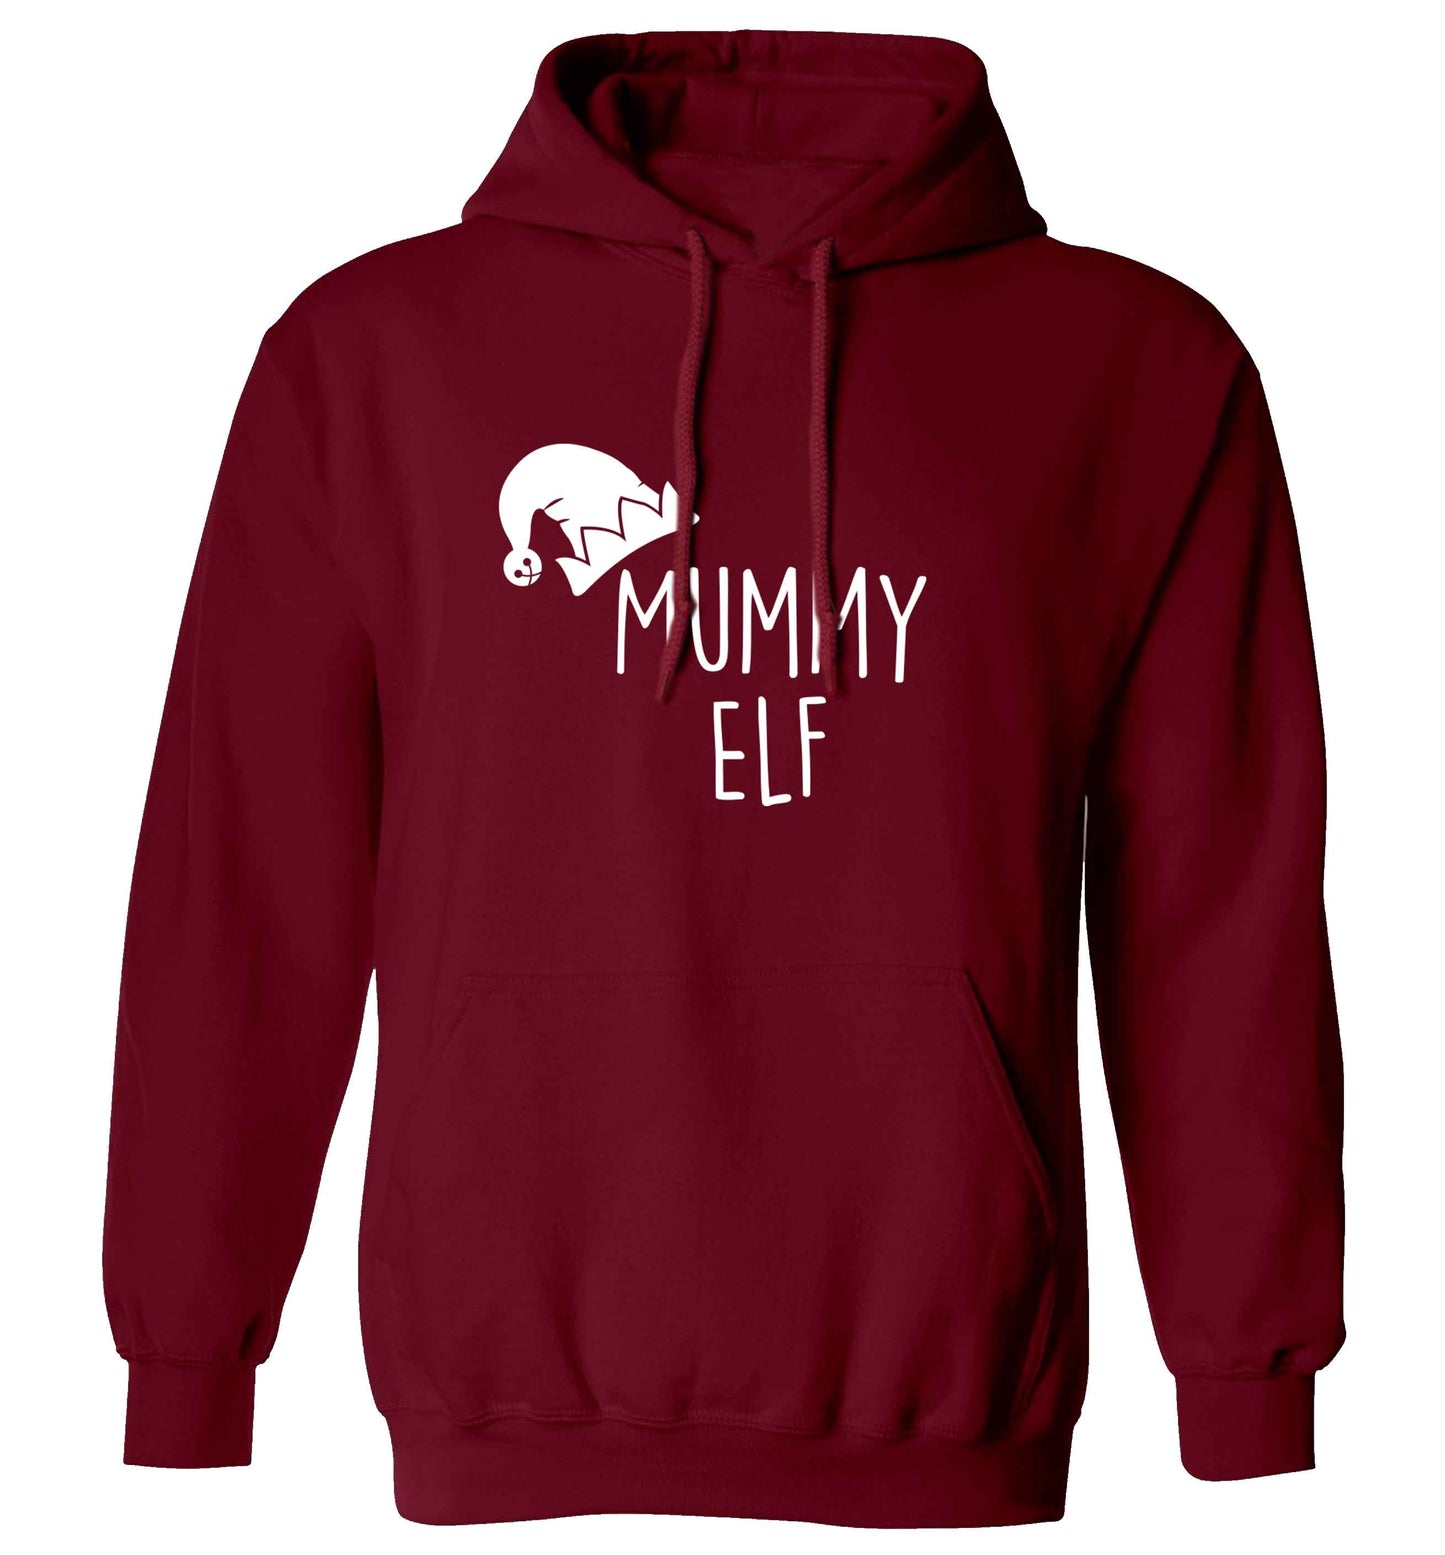 Mummy elf adults unisex maroon hoodie 2XL